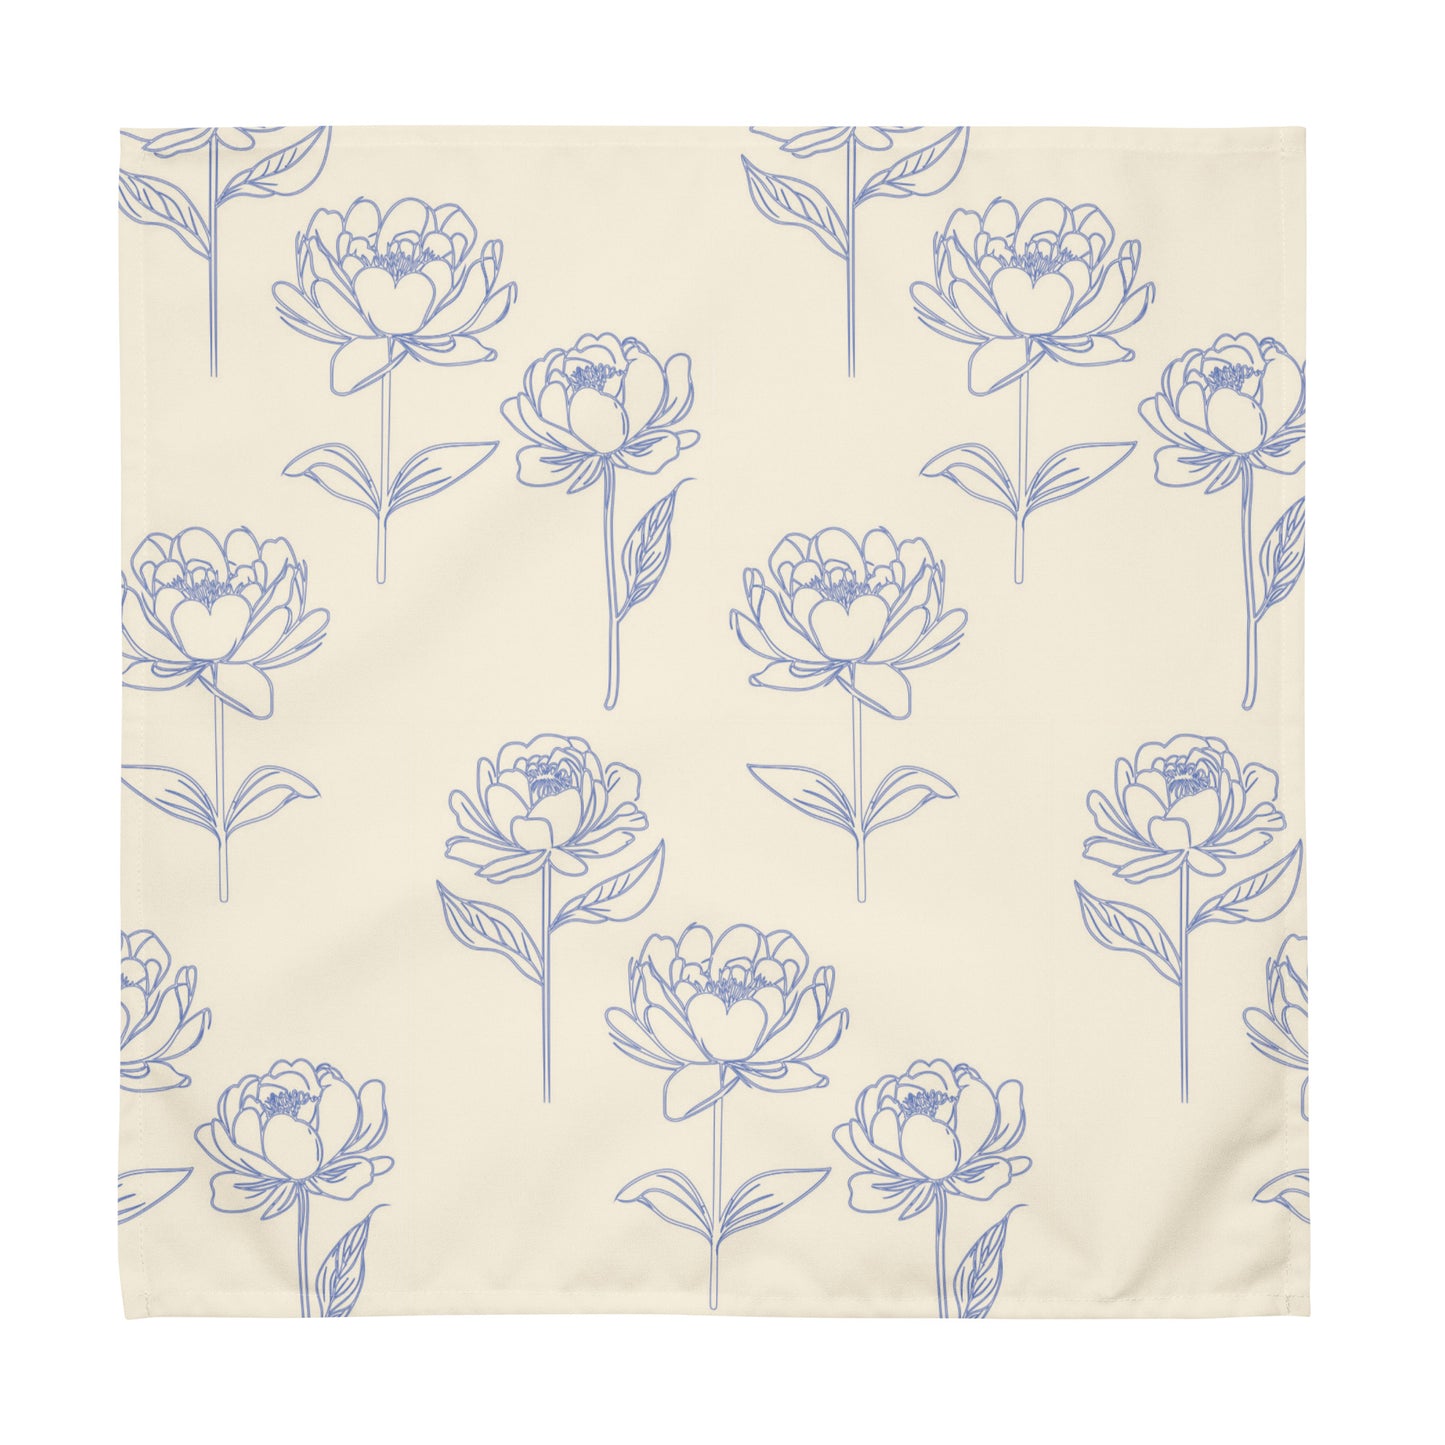 Pend Oreille Peonies Cloth napkin set